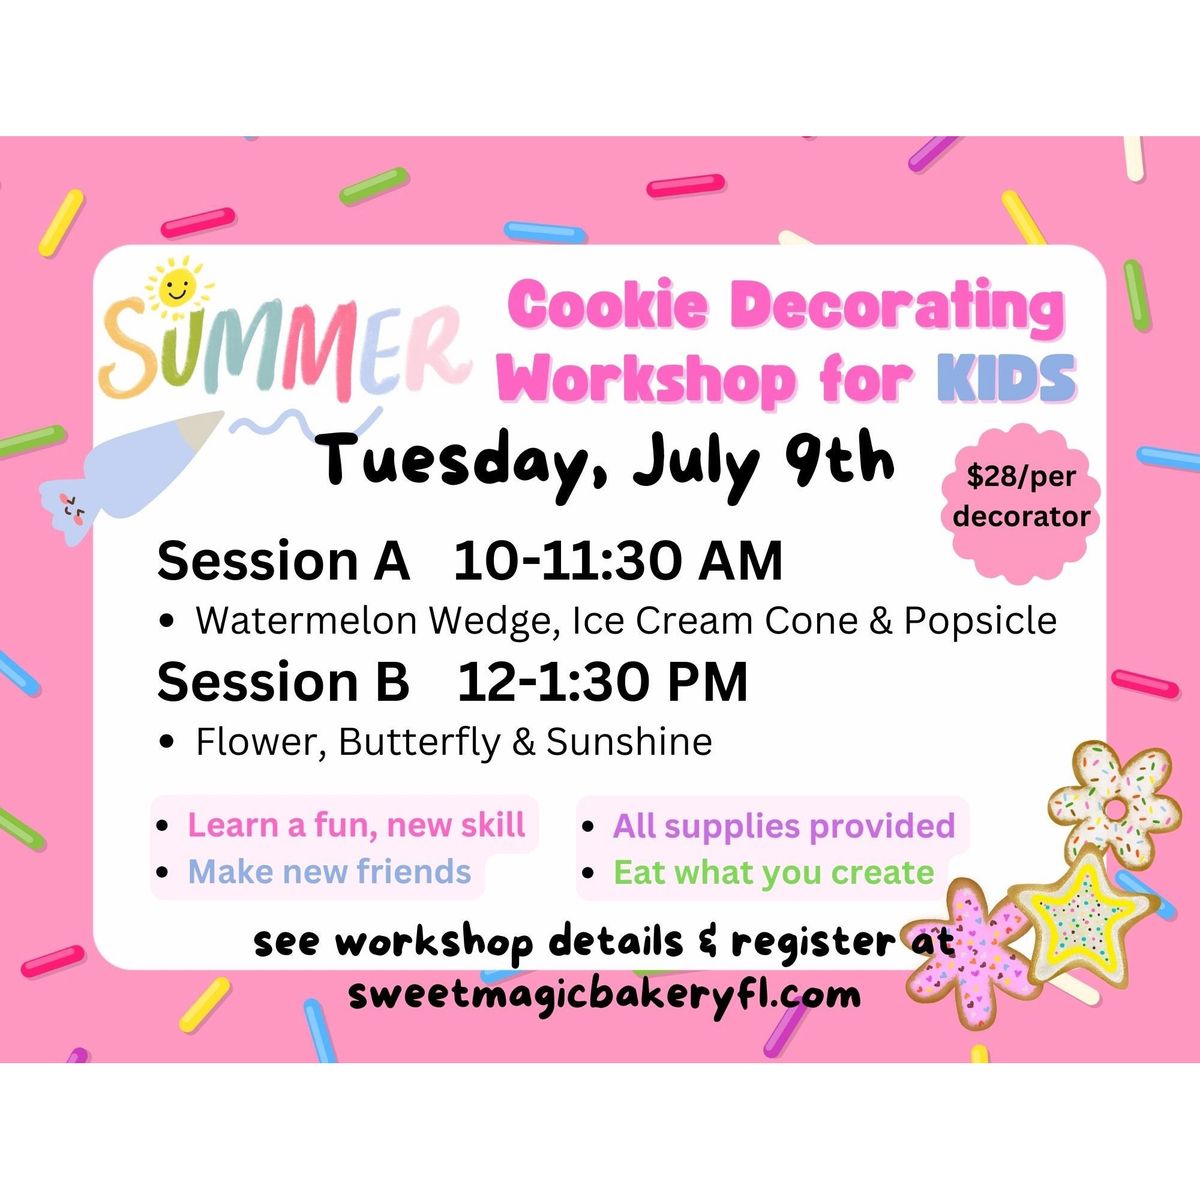 Cookie Decorating Workshop for Kids - Session B